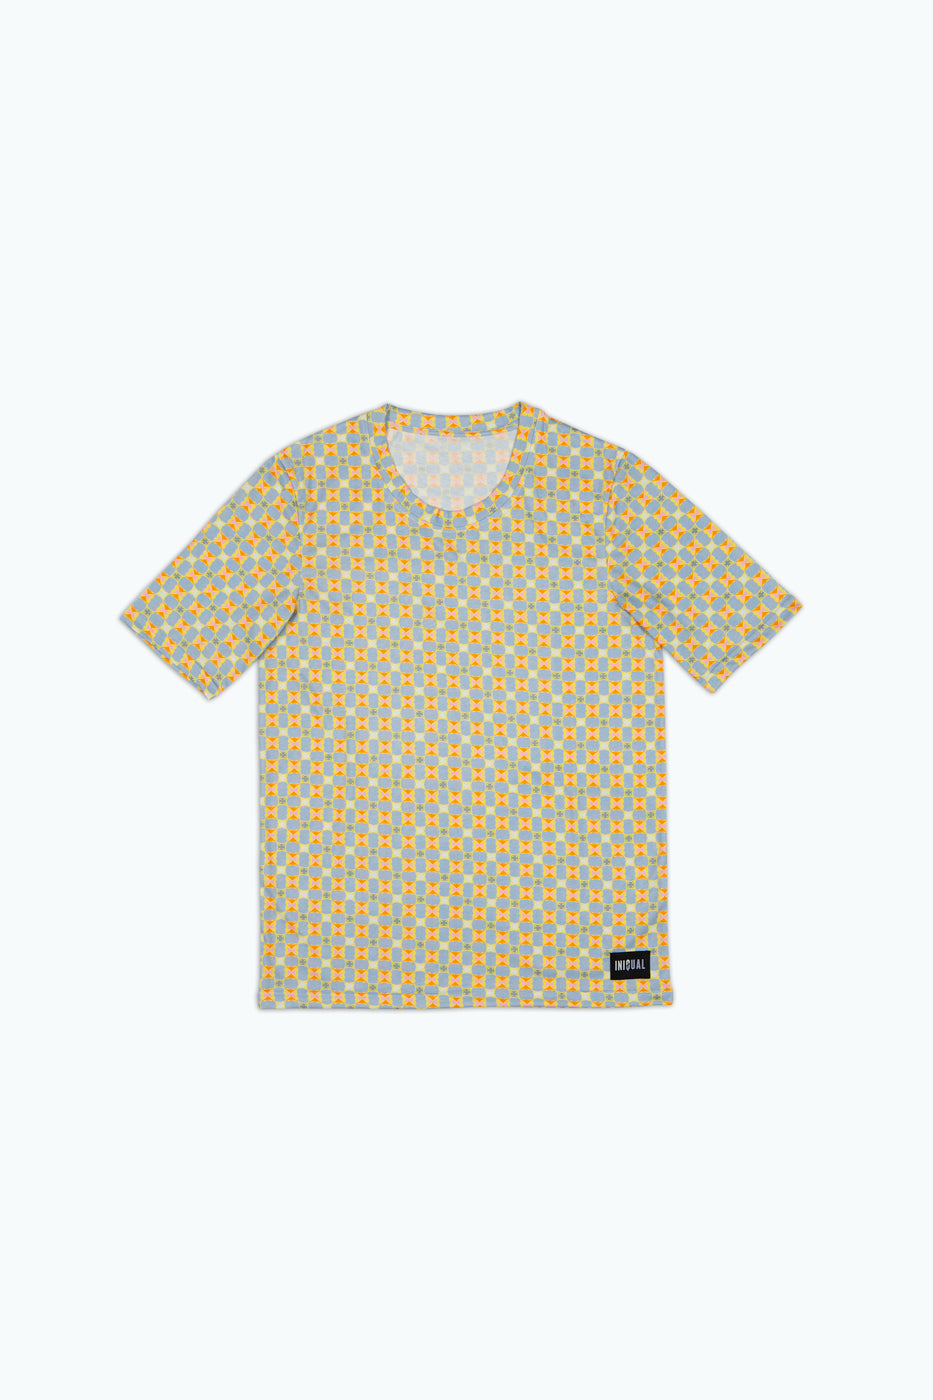 Camiseta unisex con estampado geométrico